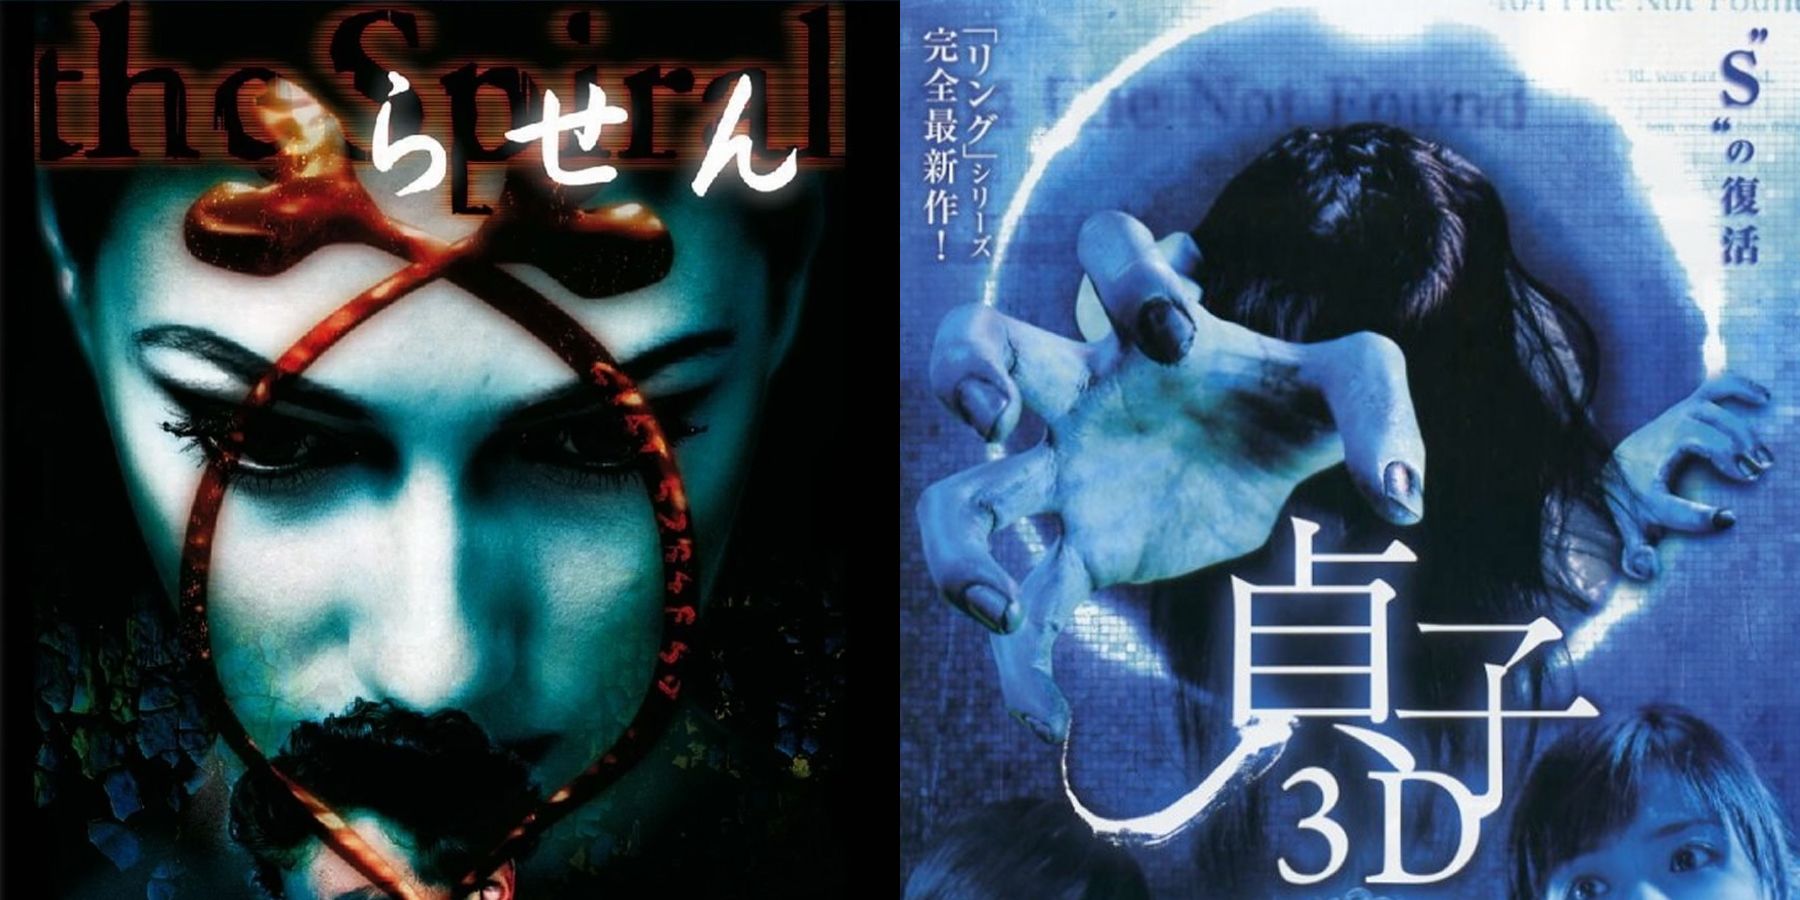 The Spiral and Sadako 3D Film Posters